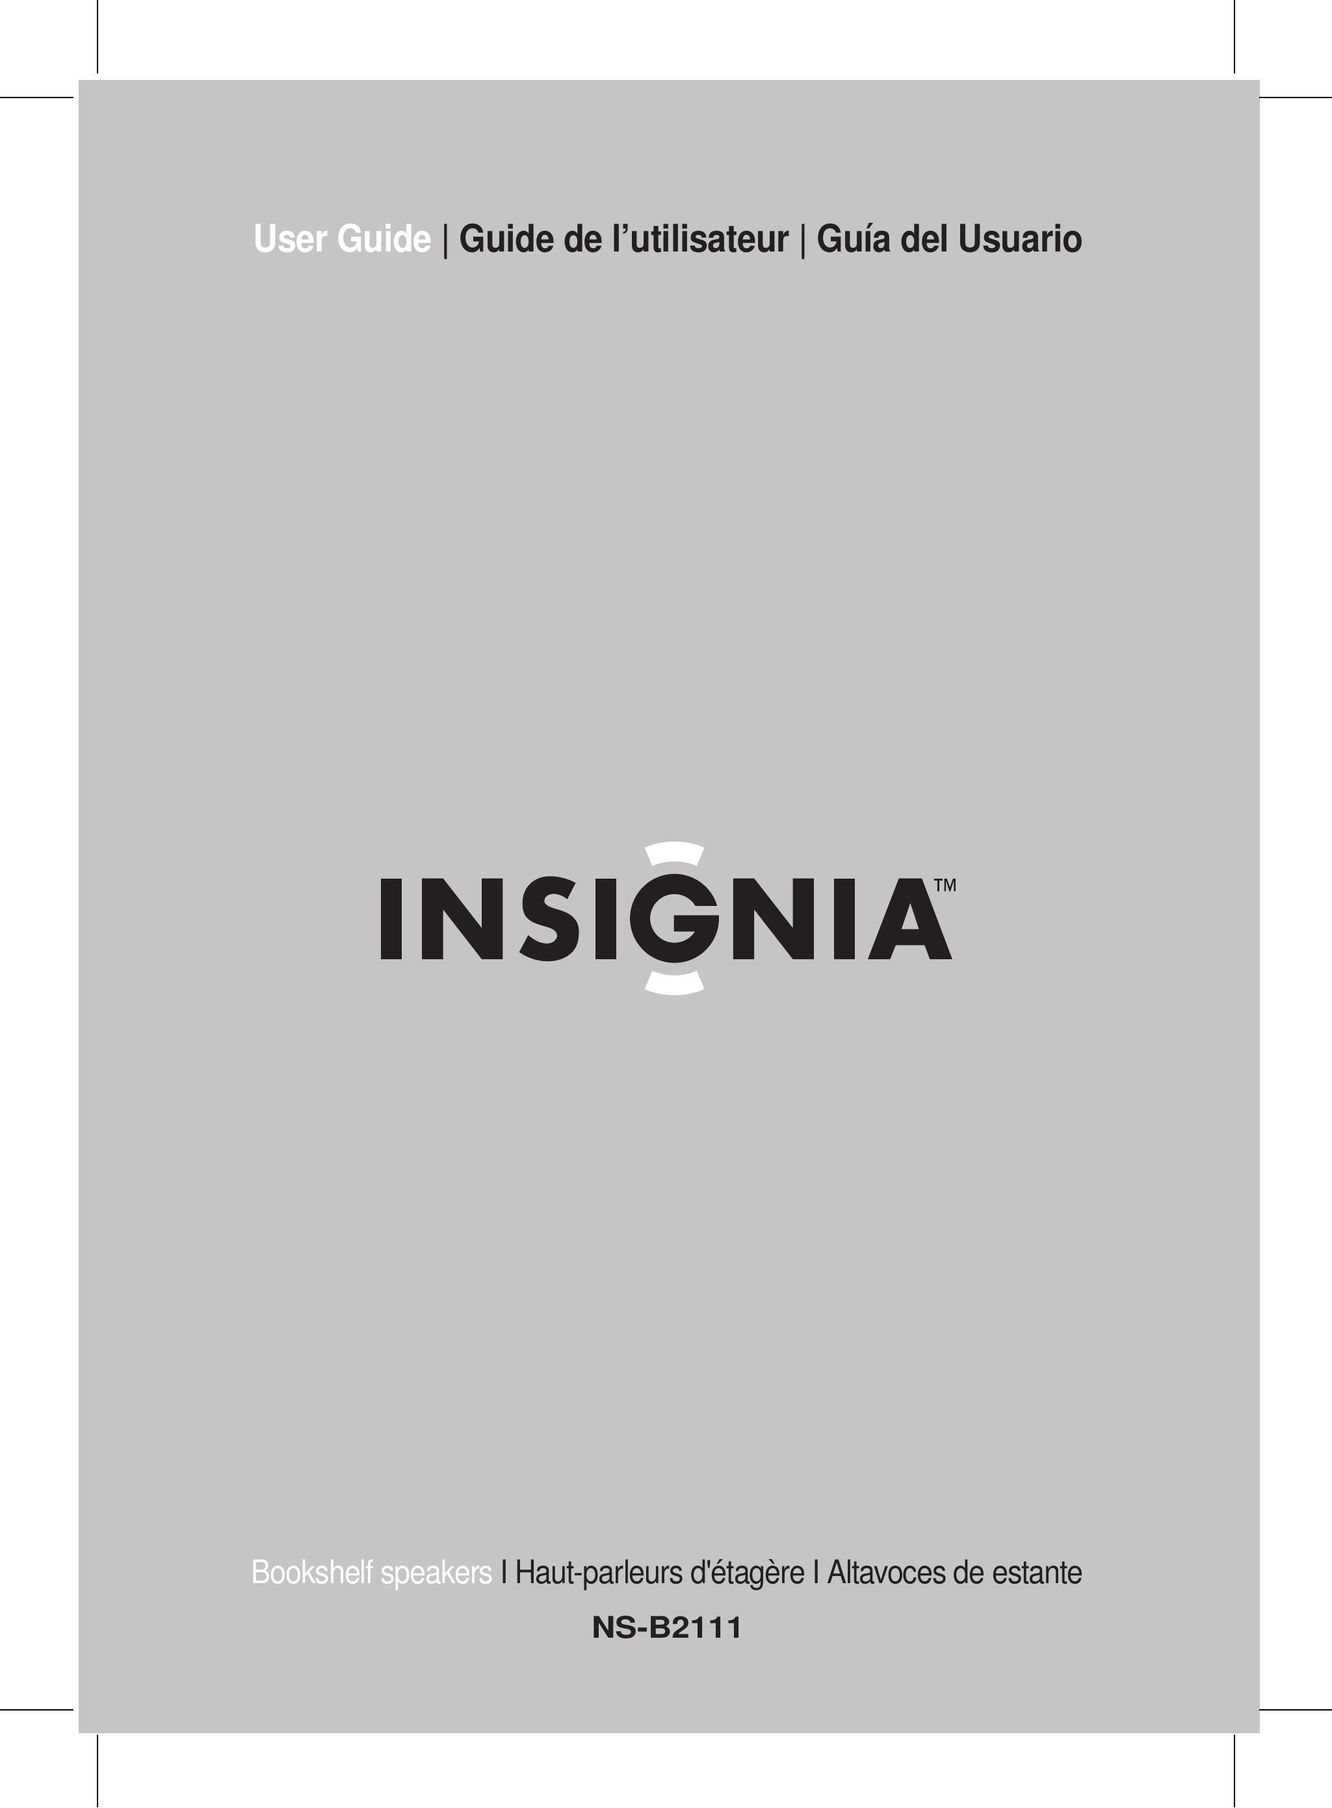 Insignia NS-B2111 Speaker User Manual